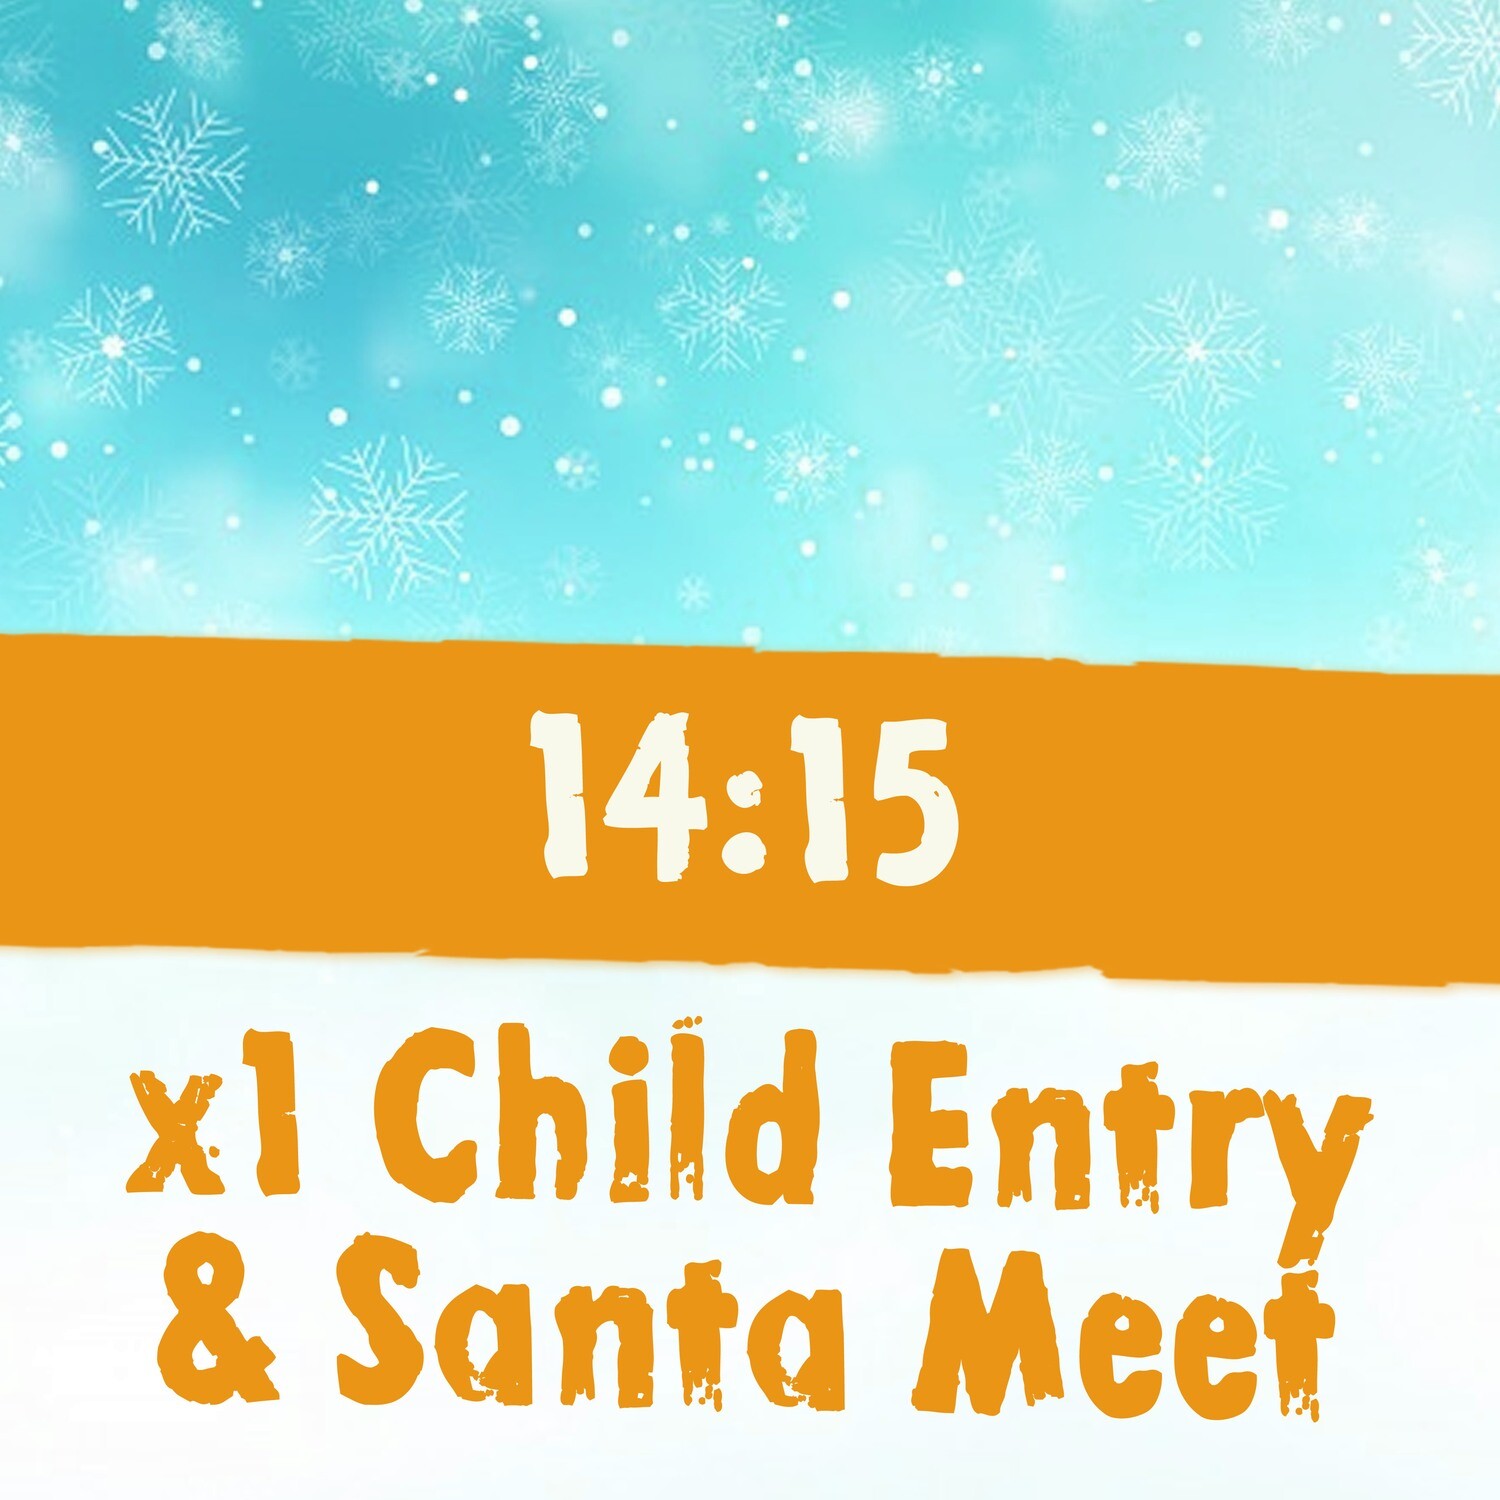 x1 Child Admission + Santa Meet 3rd Dec / 14:15